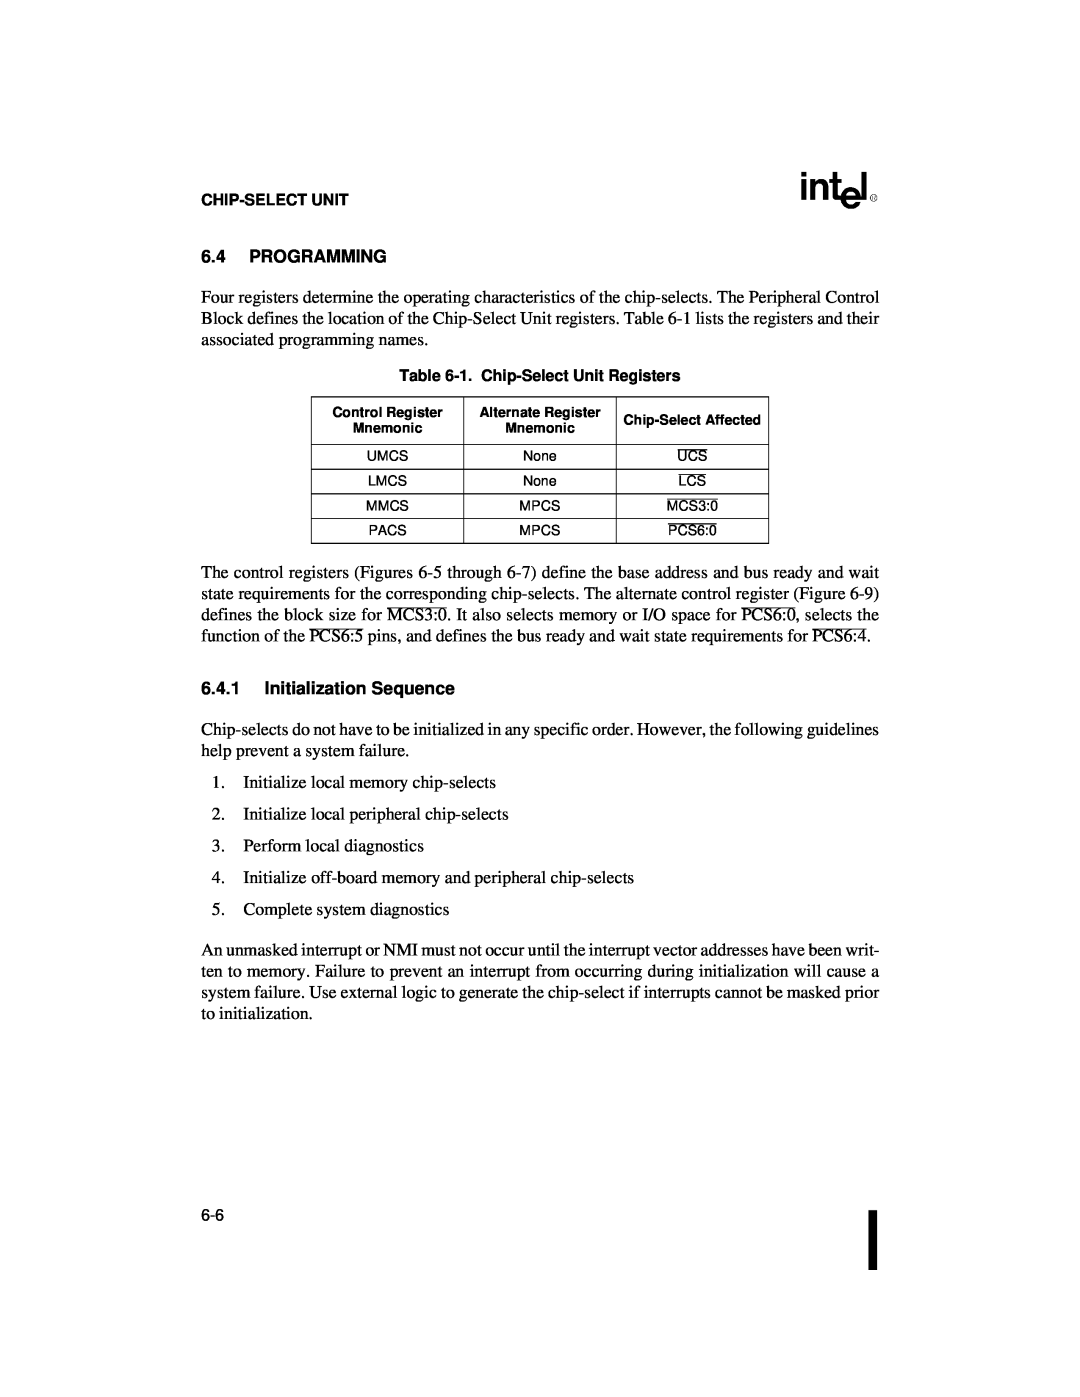 Intel 80C186XL, 80C188XL user manual 6.4PROGRAMMING, 6.4.1Initialization Sequence 